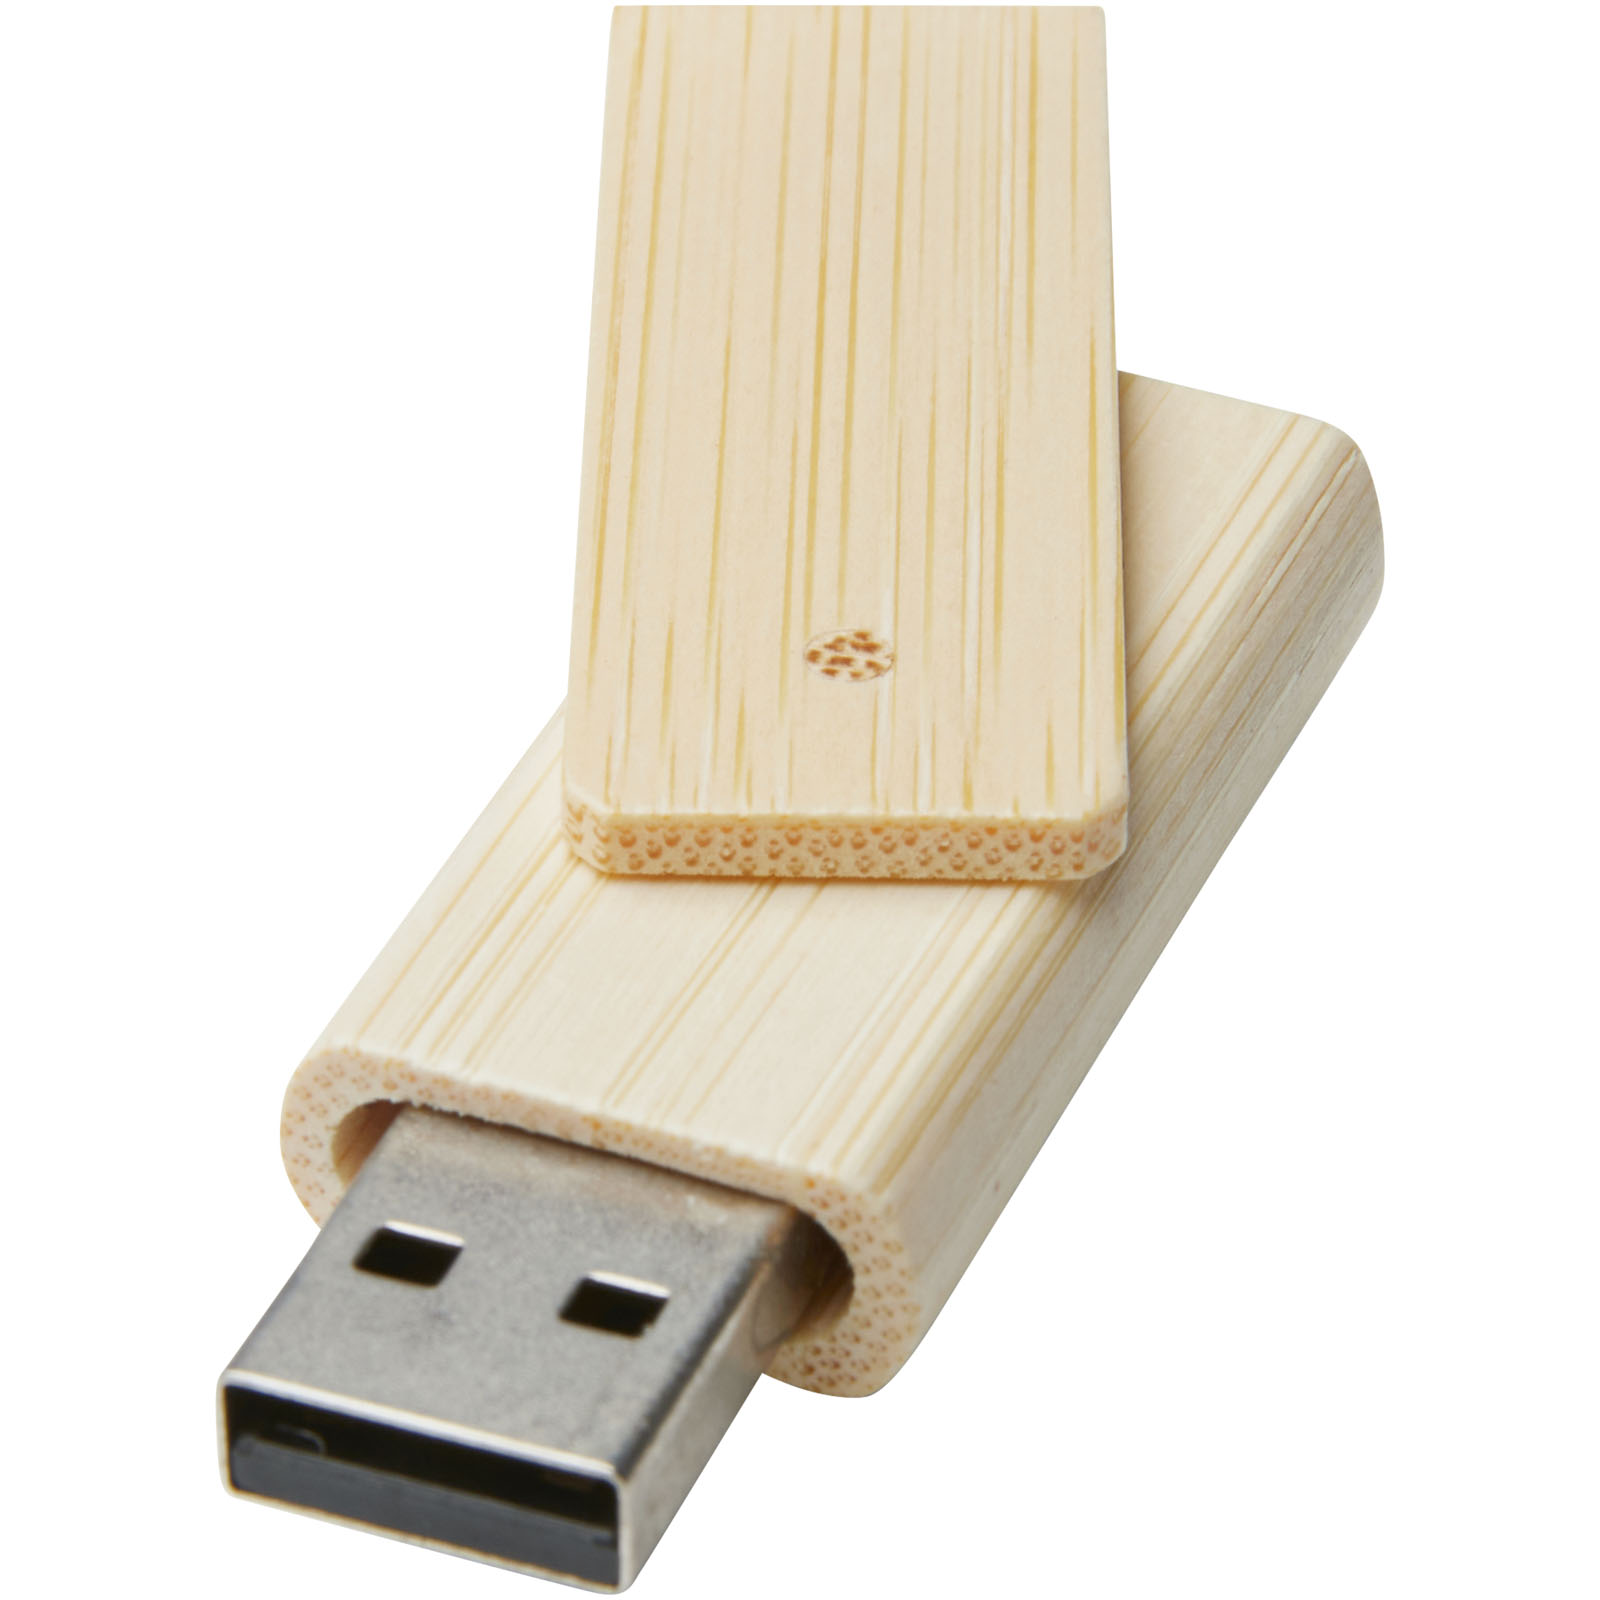 Clés USB - Clé USB Rotate 8 Go en bambou